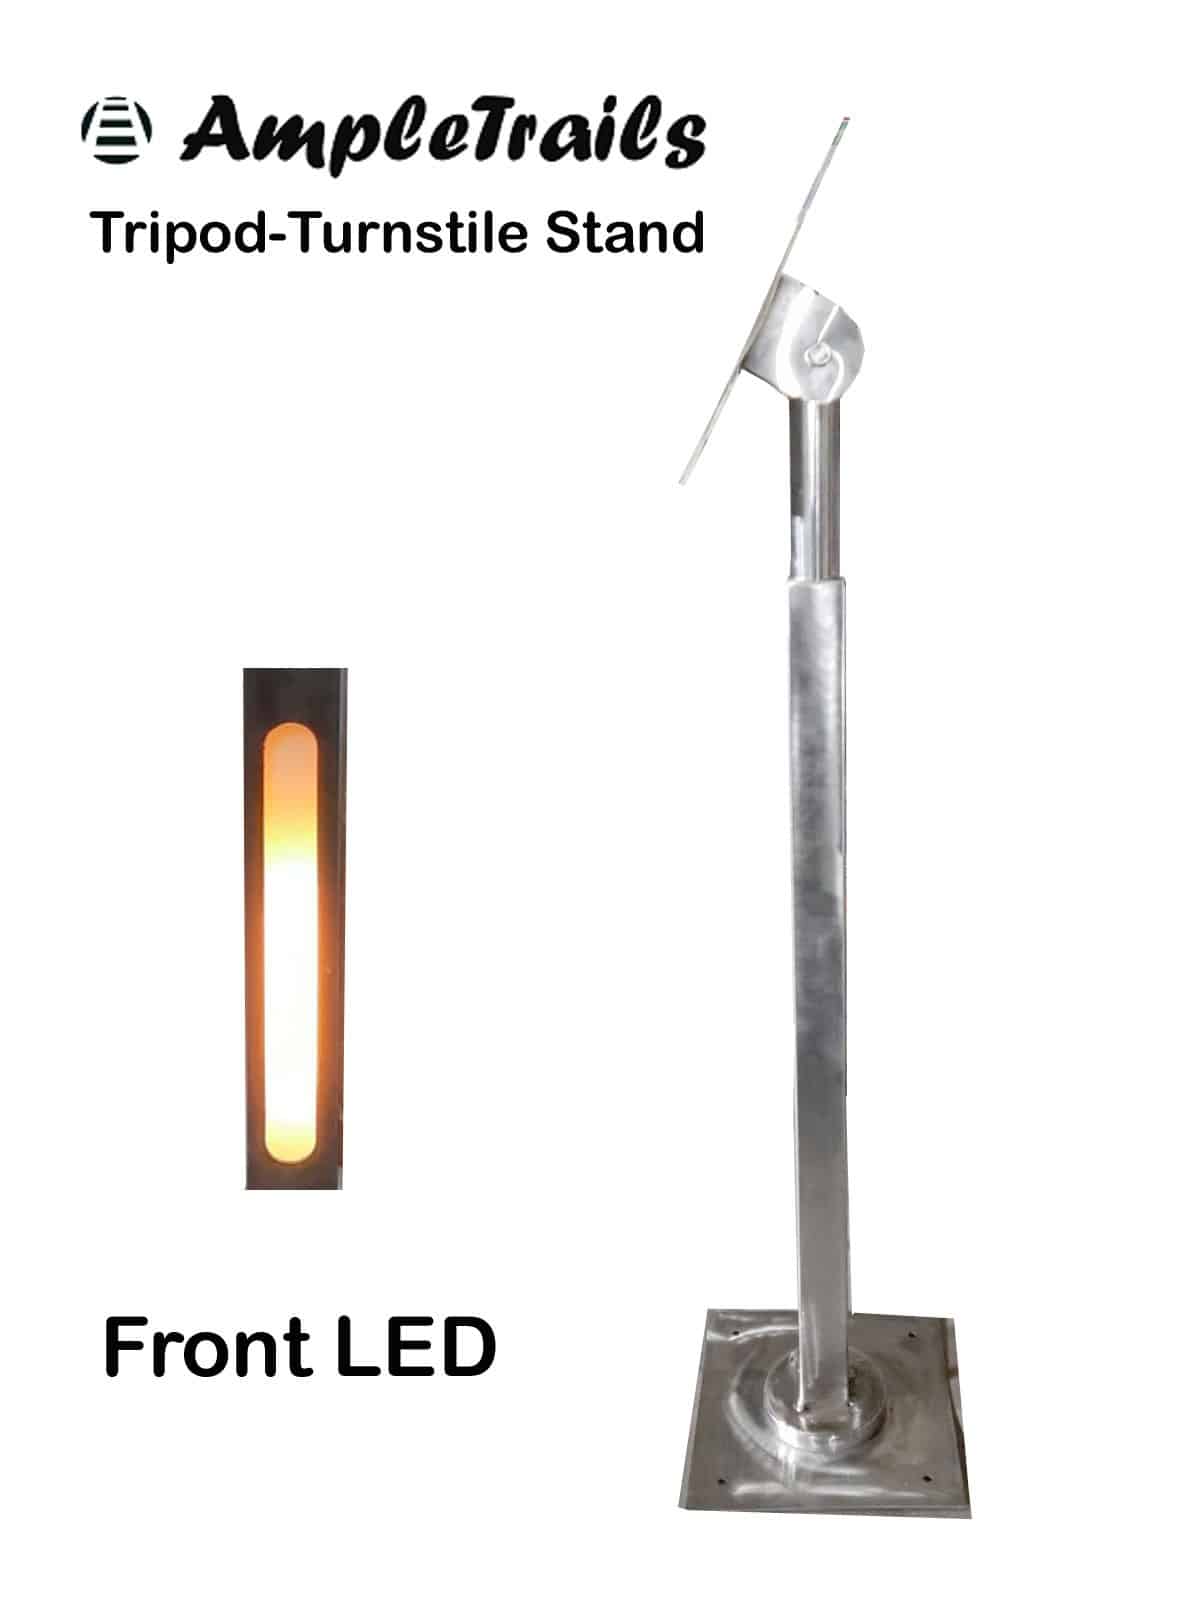 Tripod Turnstile Stand